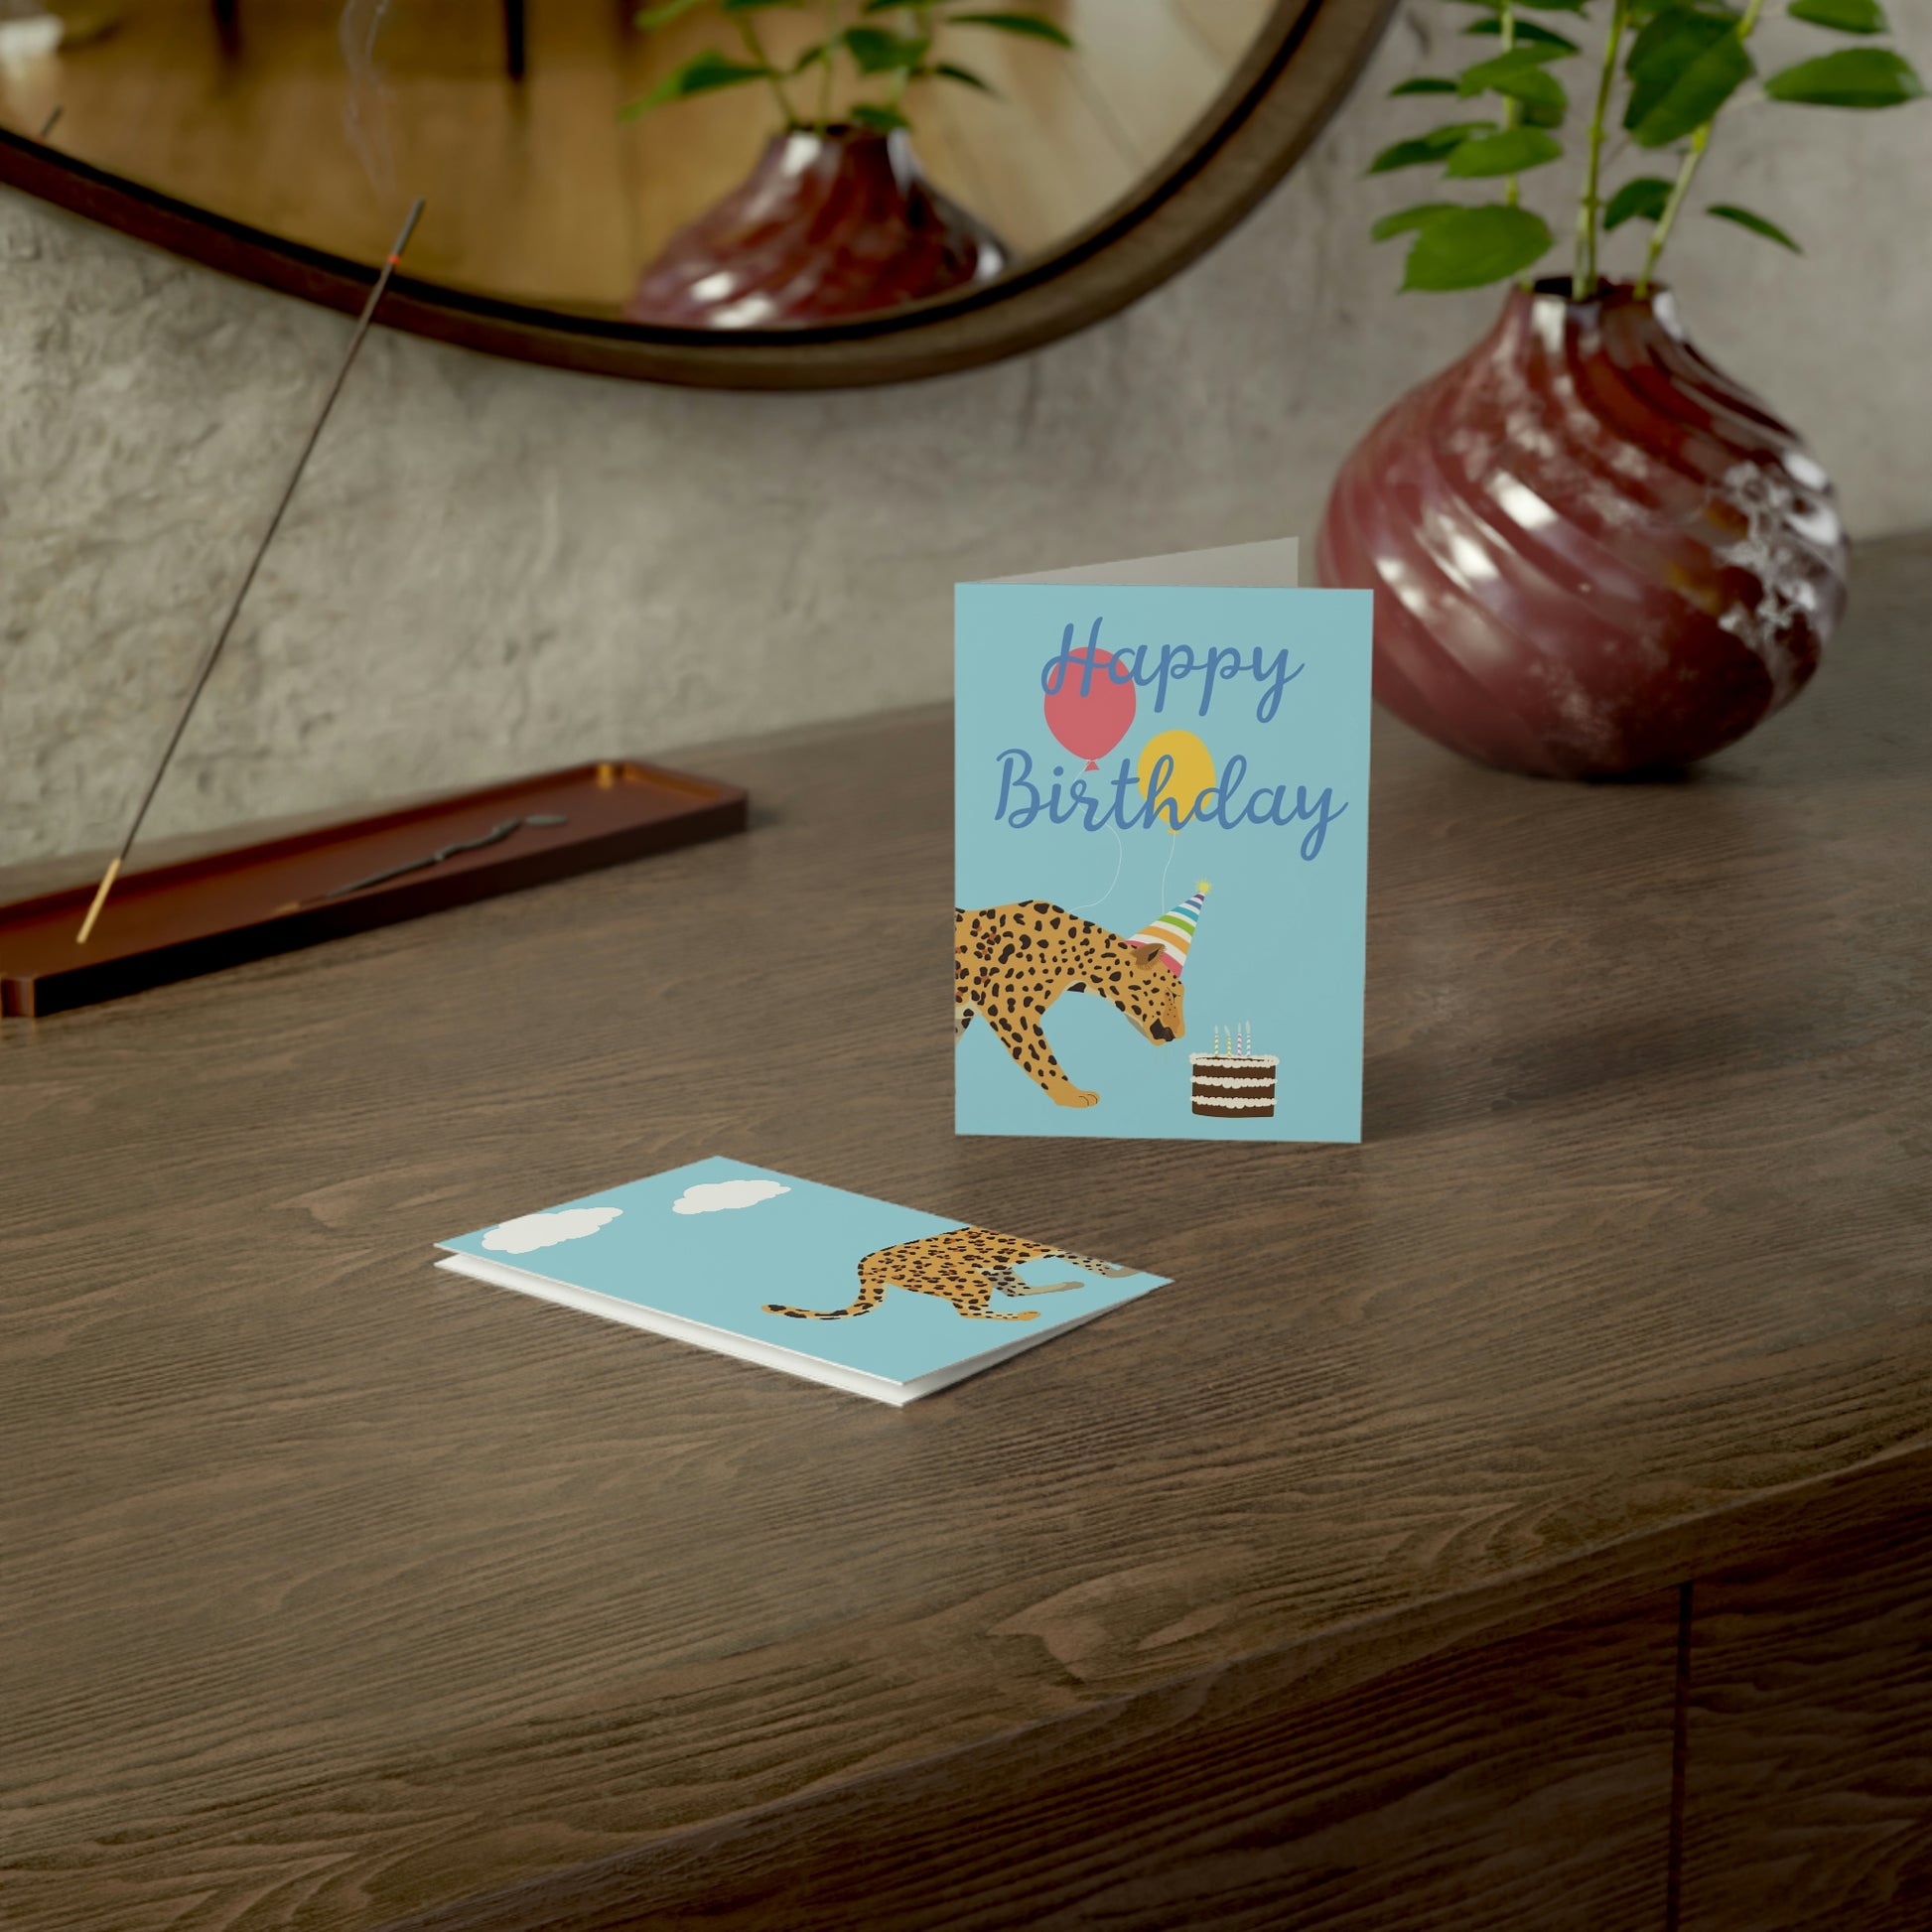 Forward Facing View of Leopard Birthday Card on Dark Table